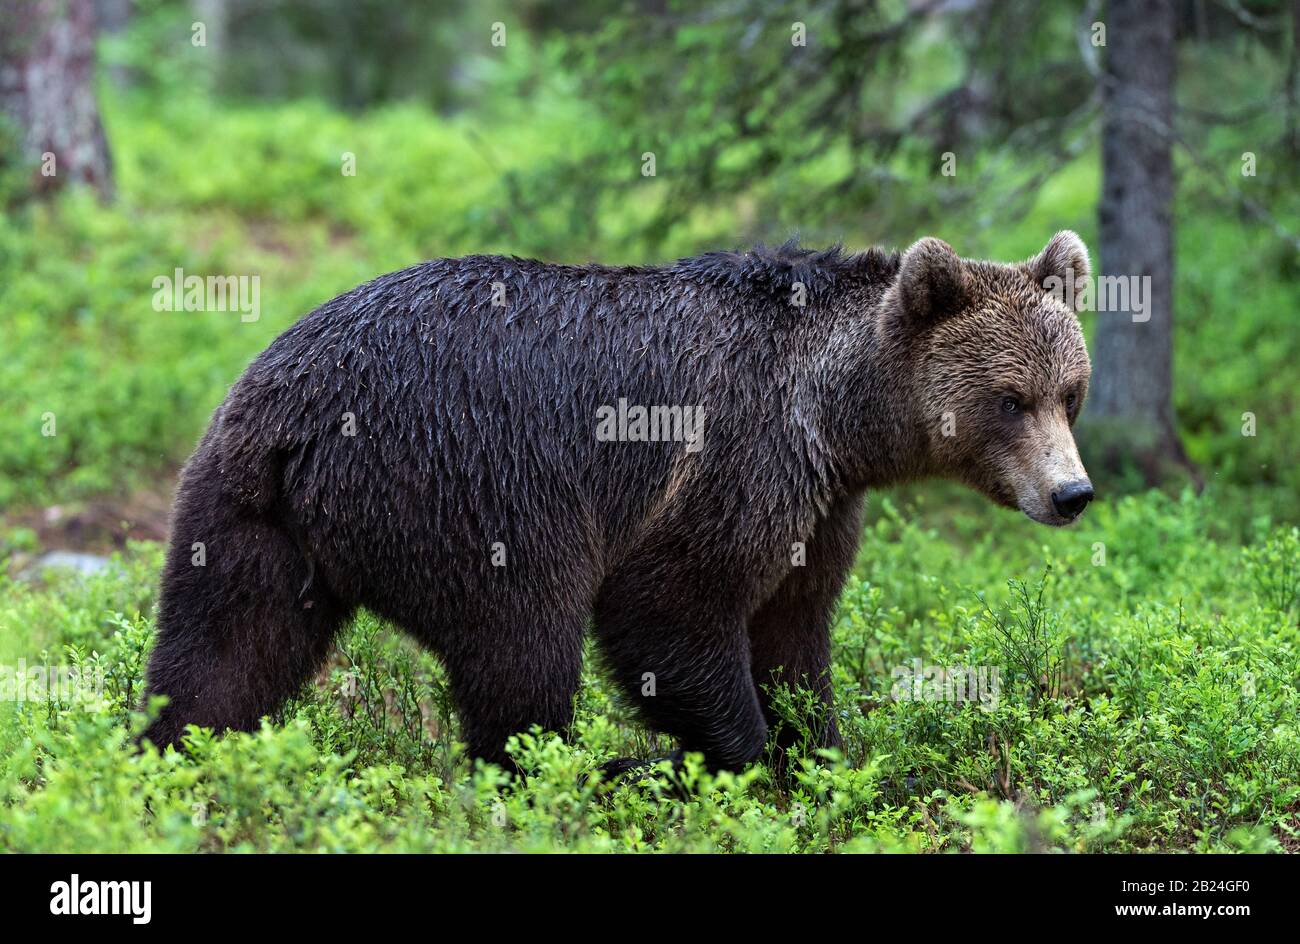 Brown bear walking in the summer forest. Scientific name: Ursus arctos. Natural habitat. Stock Photo